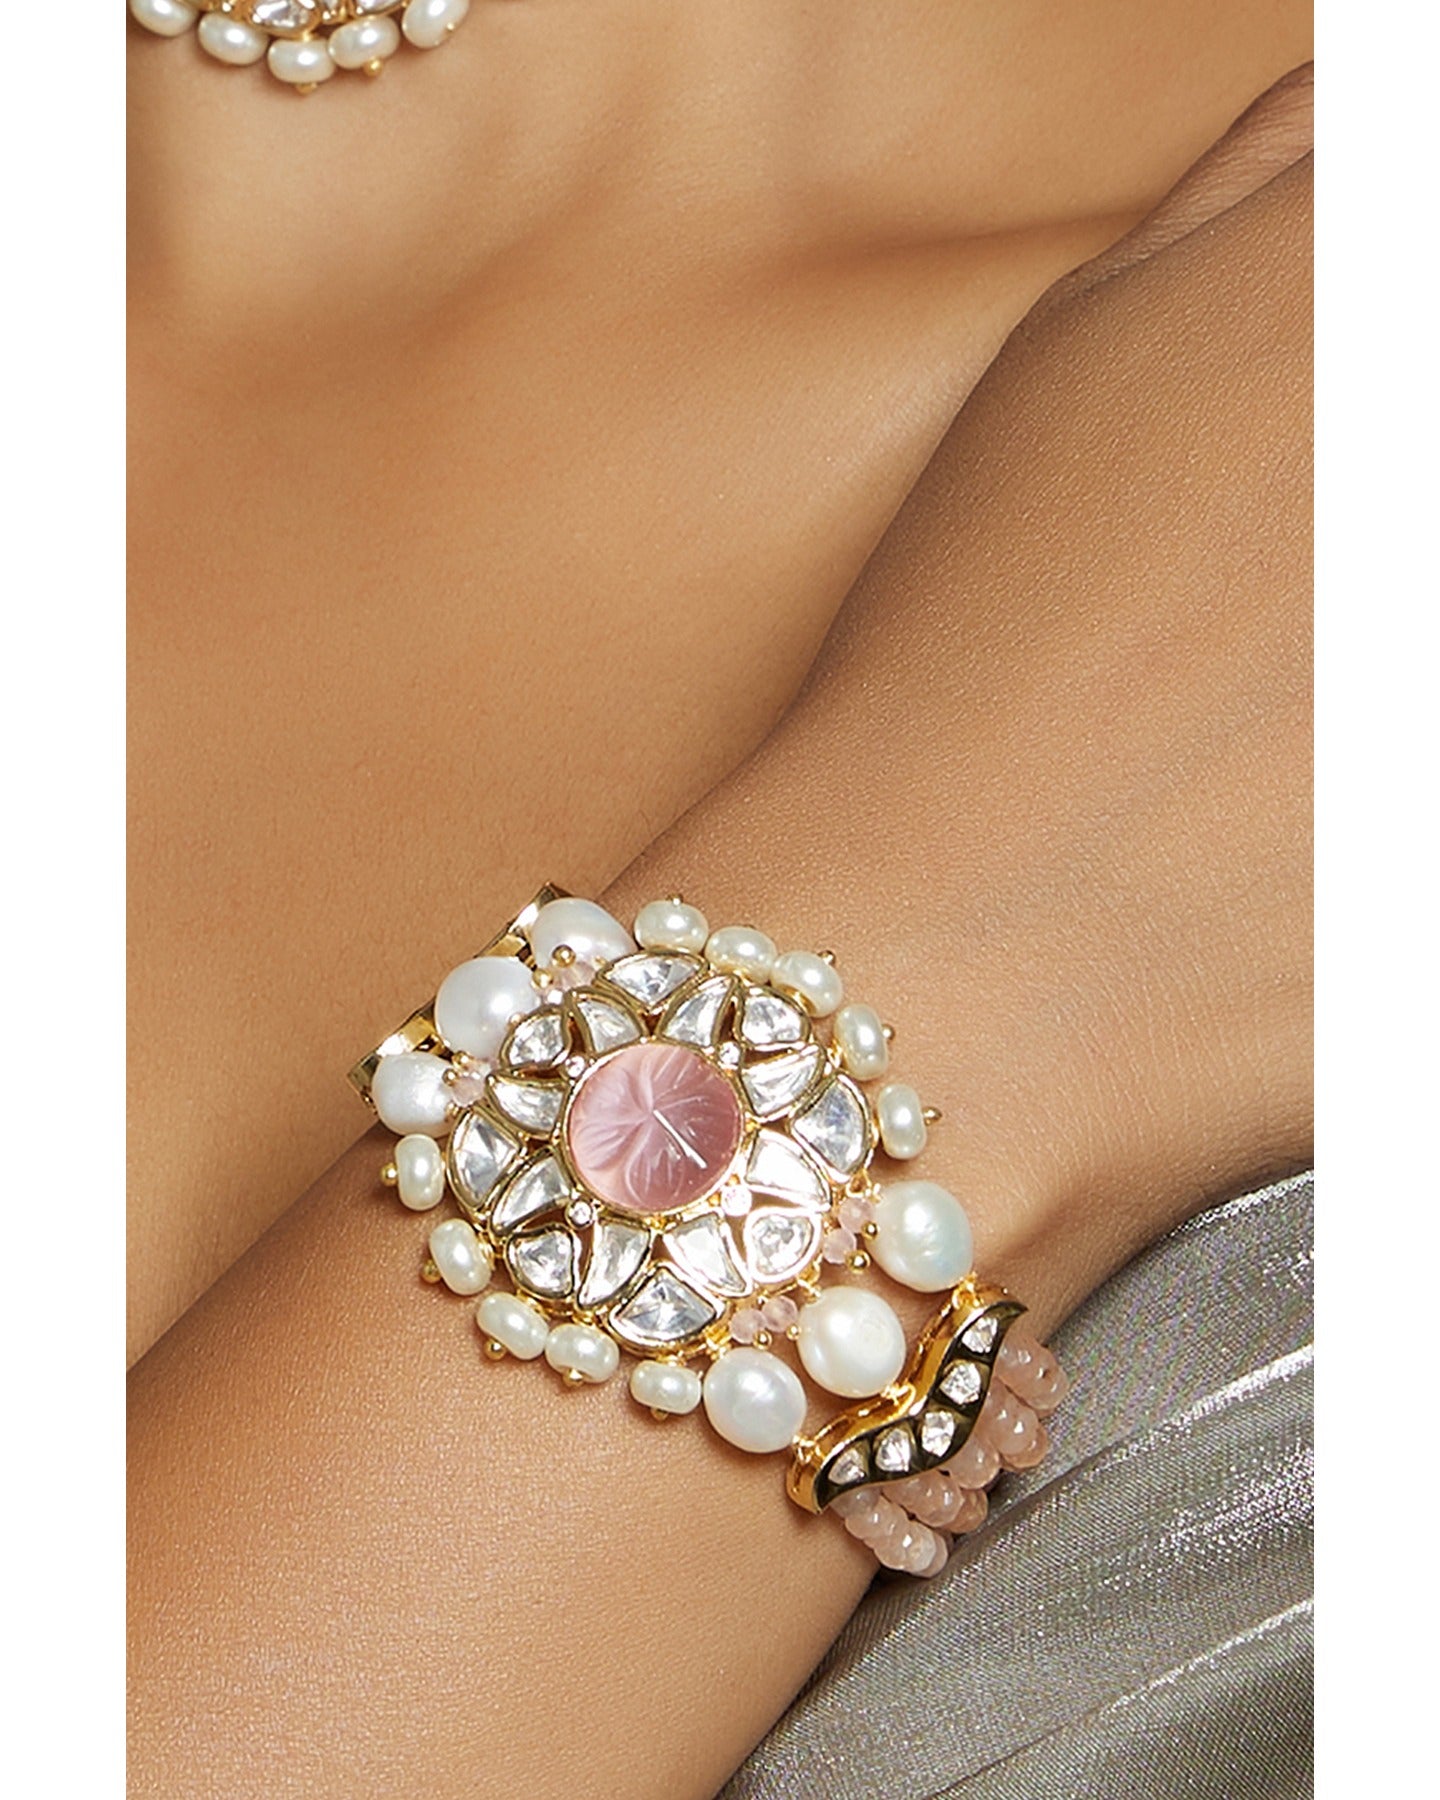 Alluring Pink & White Gold Bracelet